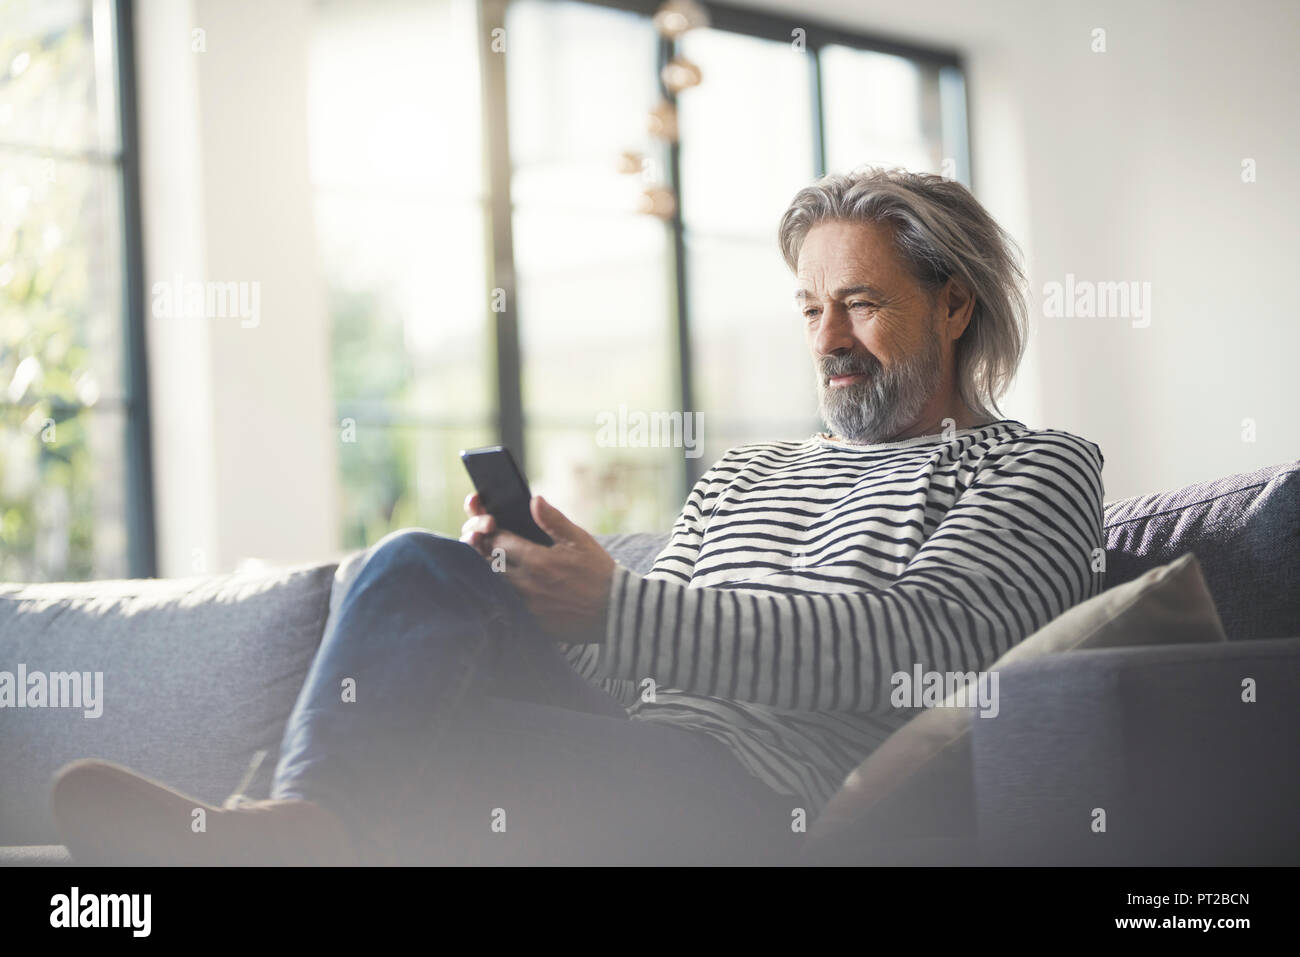 Senior man sitting on couch, using smartphone Stock Photo